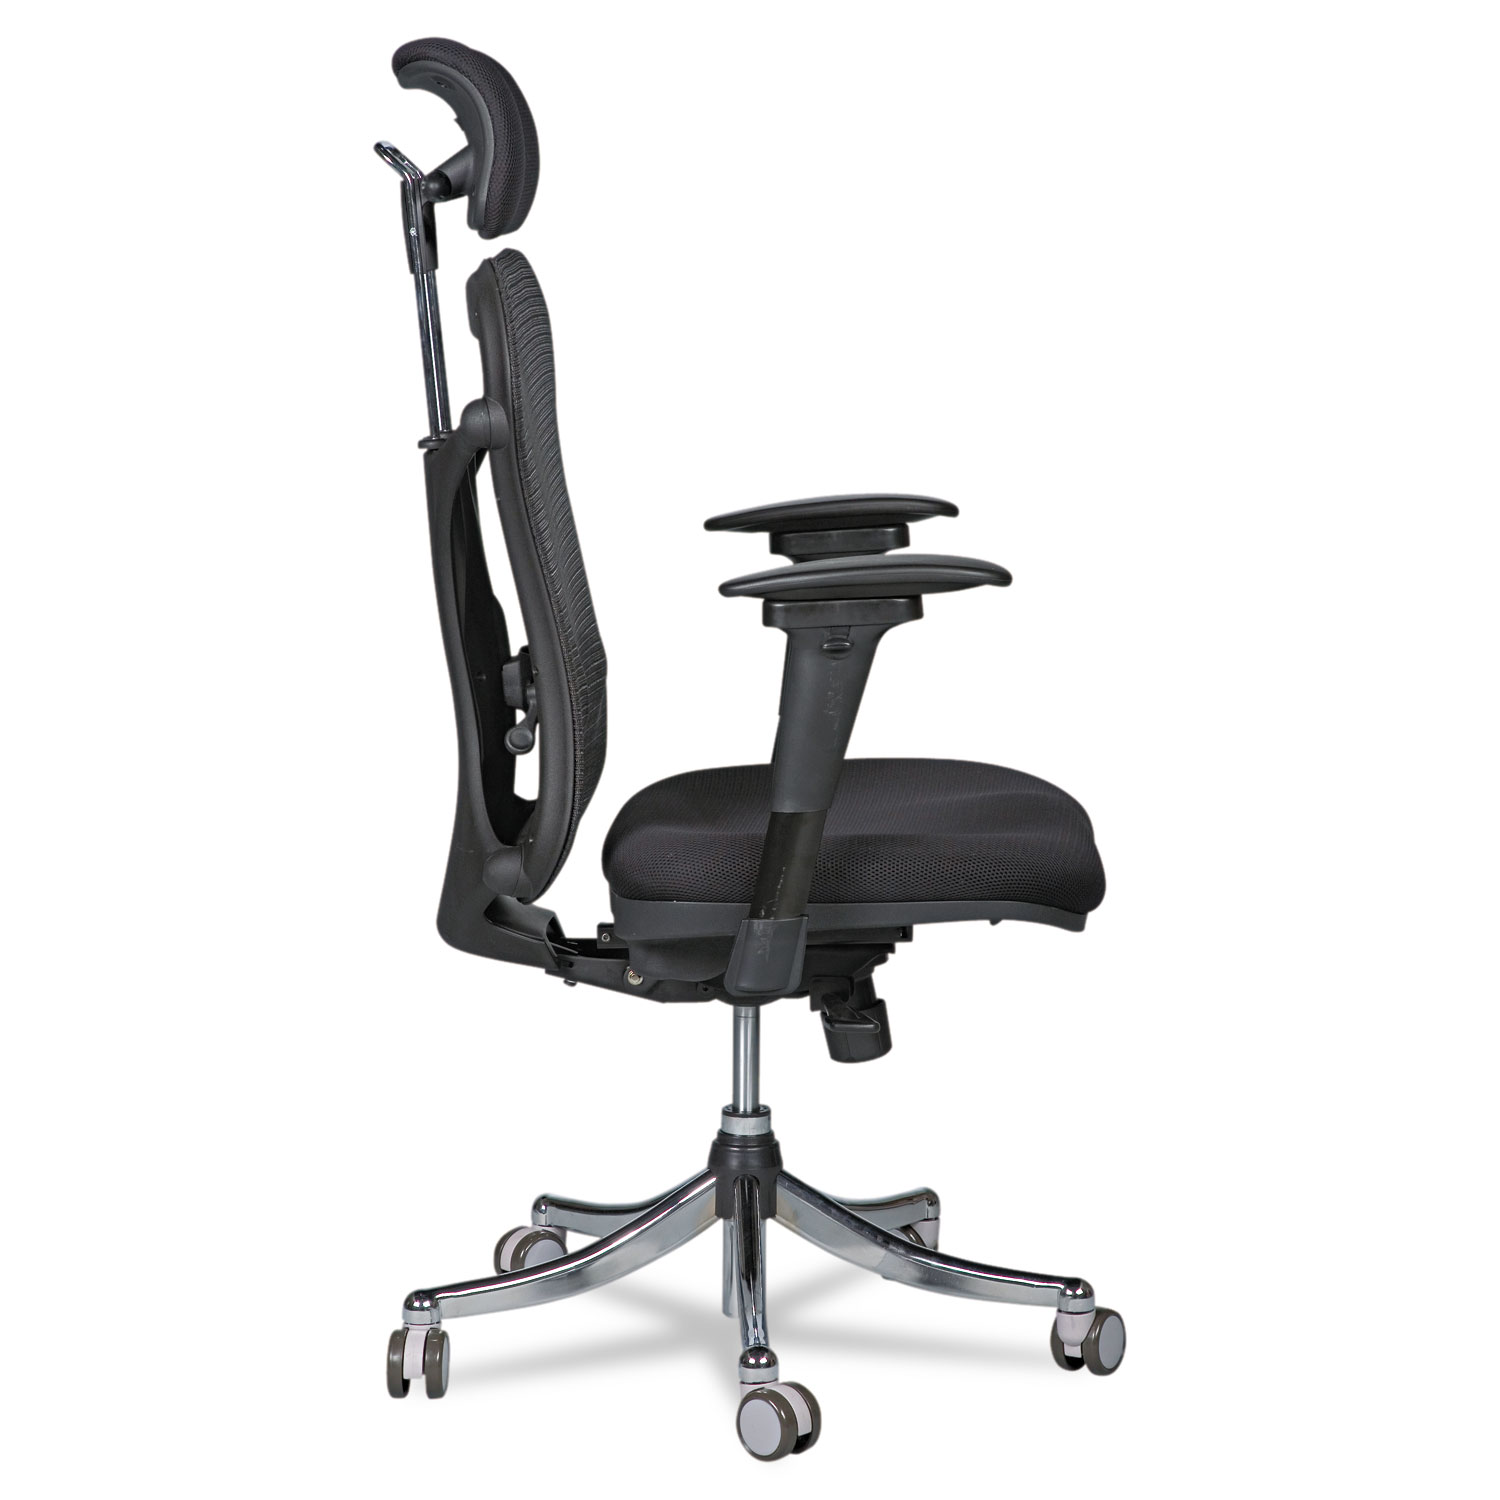 BALT Ergo Ex Executive Office Chair, Mesh Back/Upholstered Seat, Black/Chrome - image 4 of 5